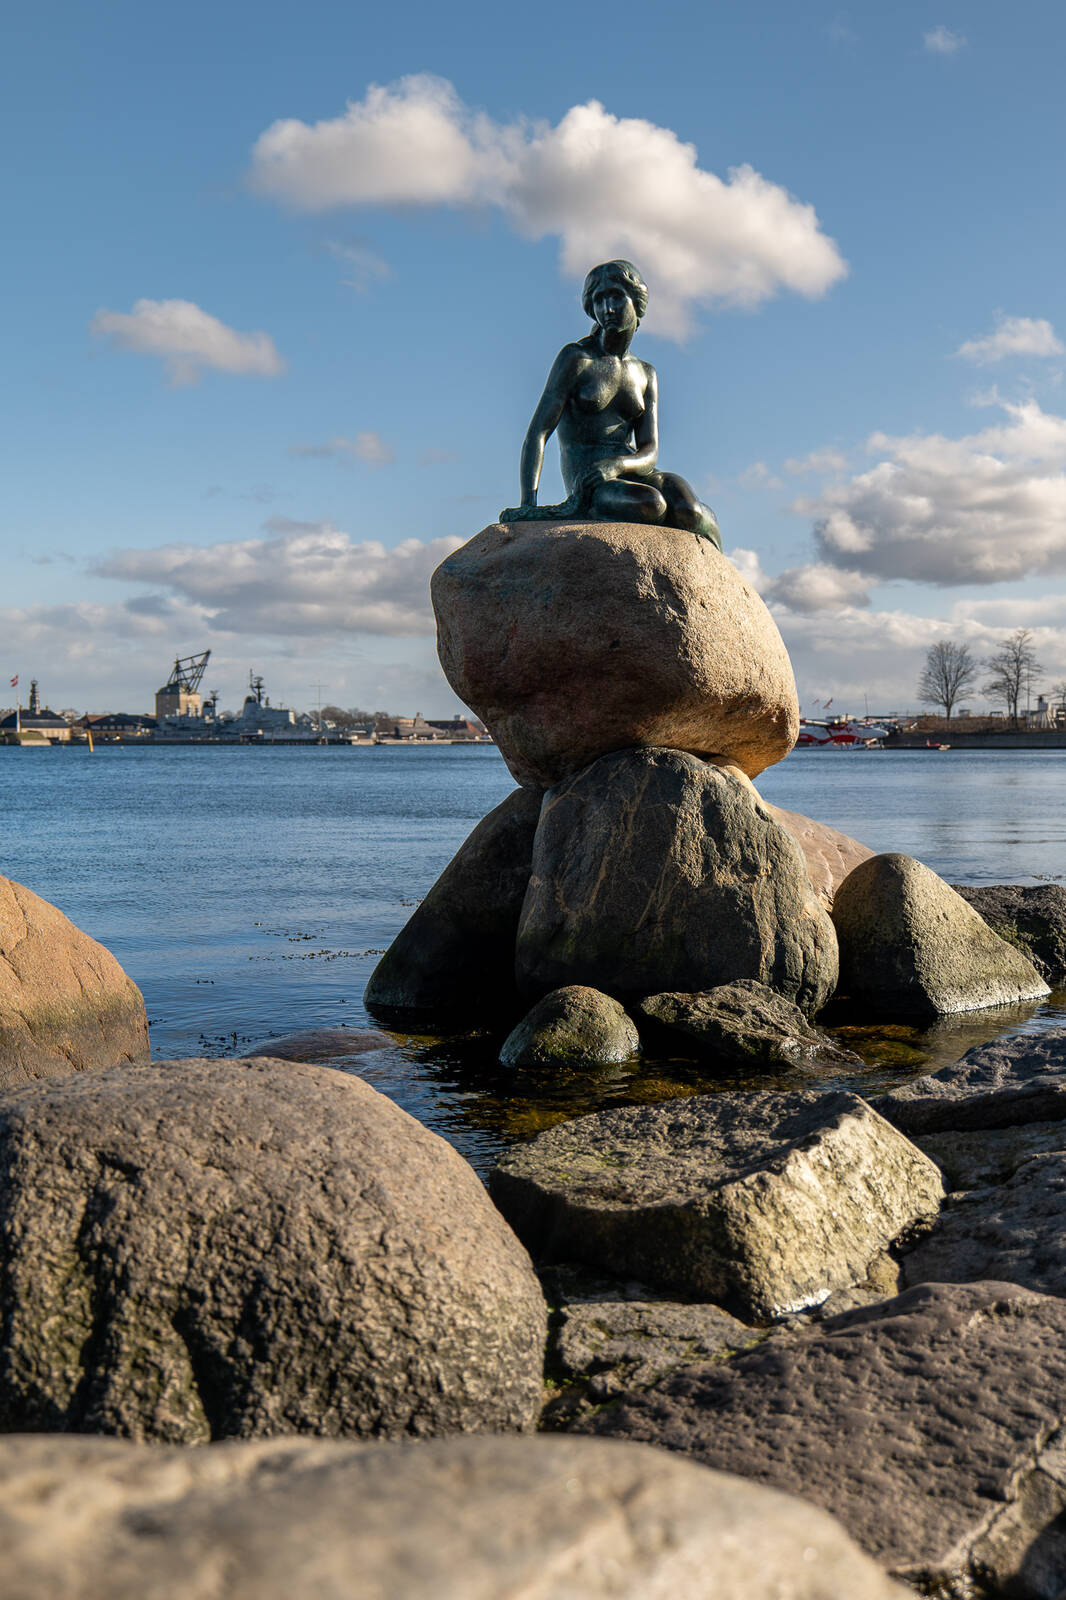 Lille Havfrue (Little Mermaid) - København photo spot